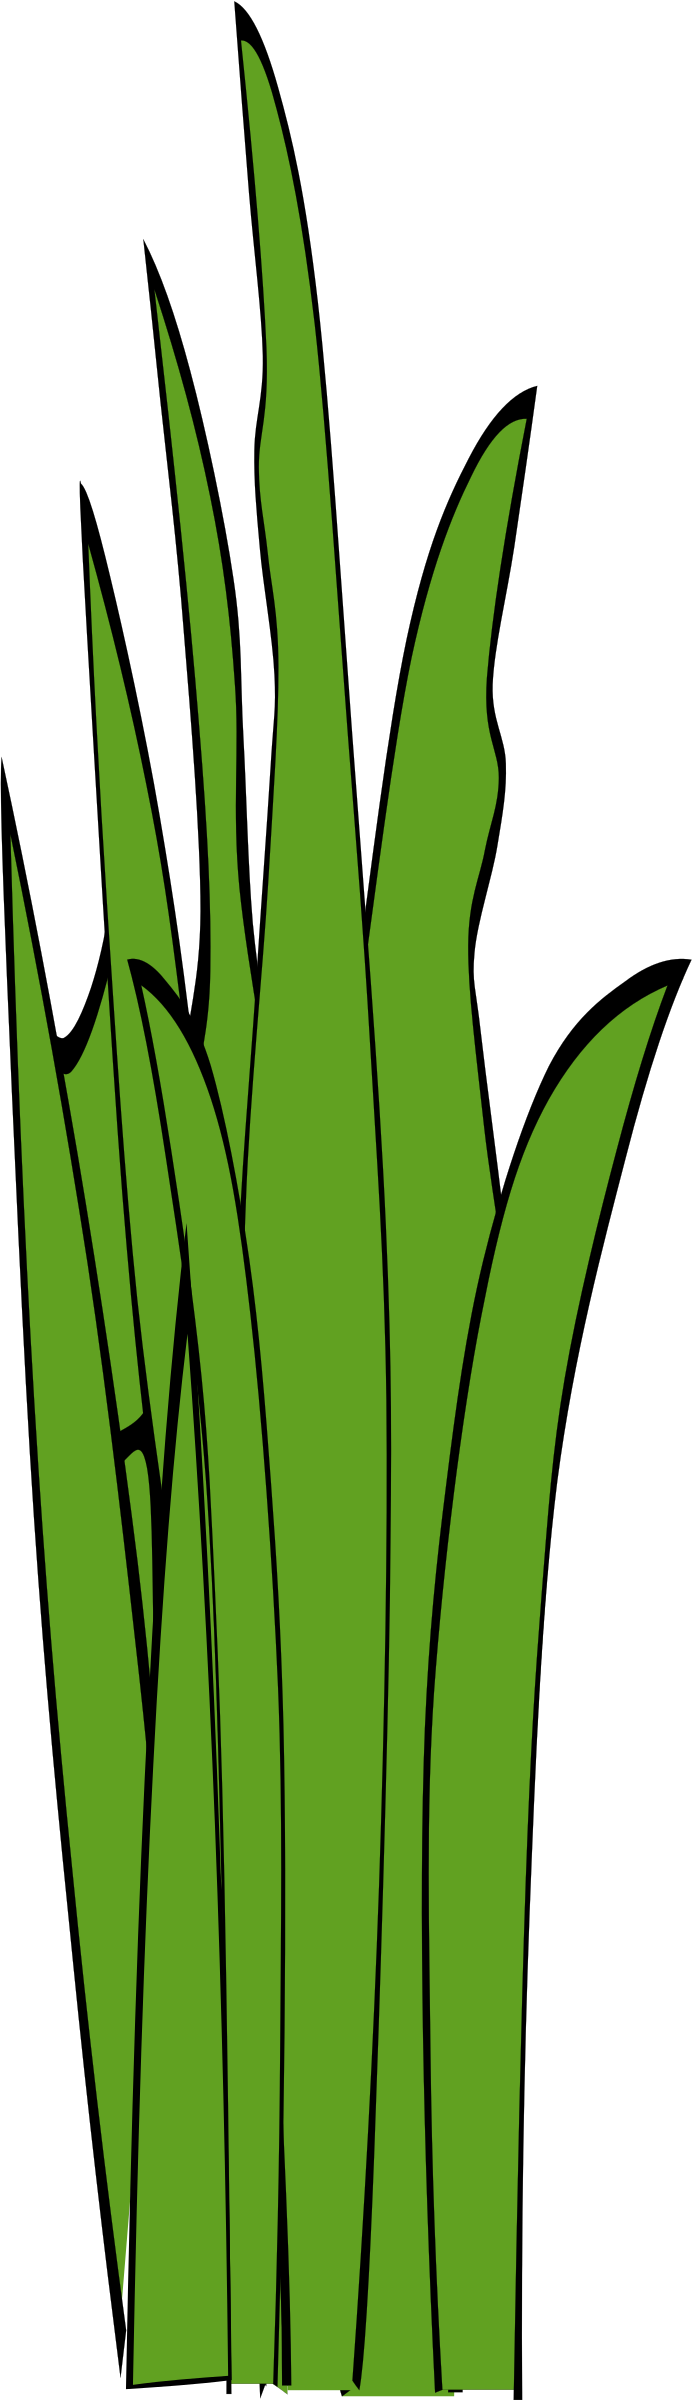 Big Image - Blade Of Grass Clip Art (692x2400)